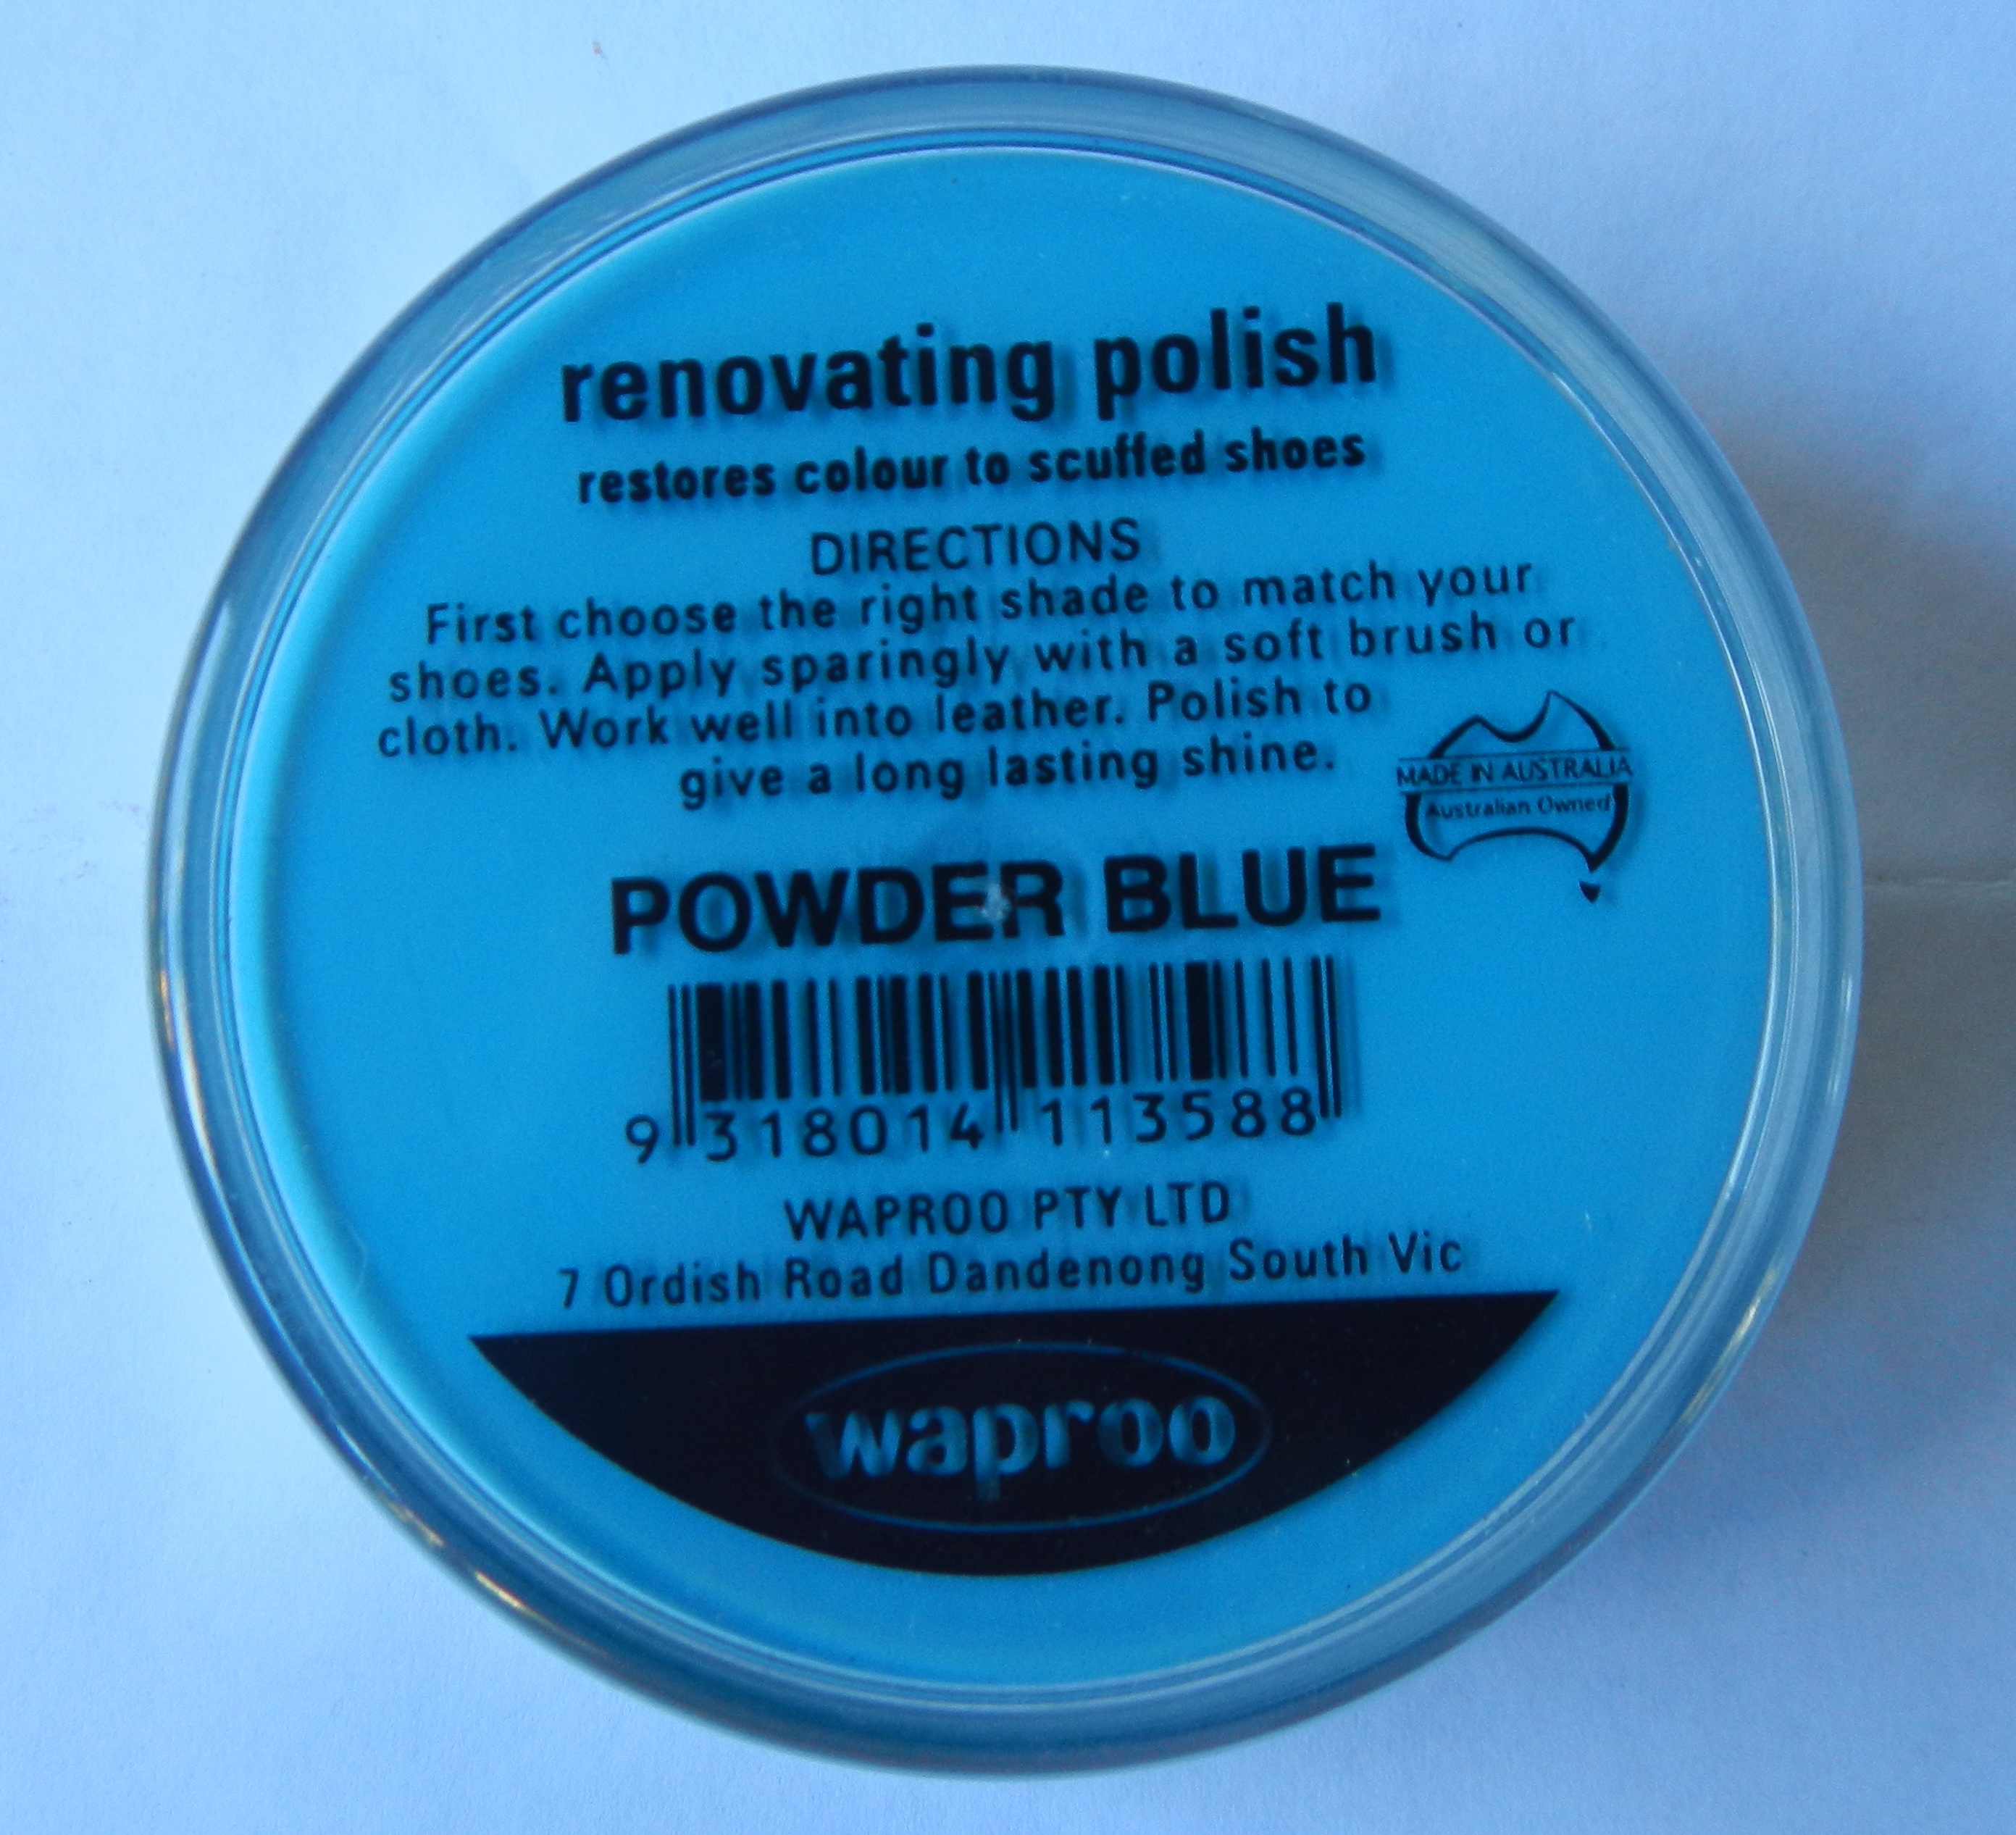 powder blue renovating polish